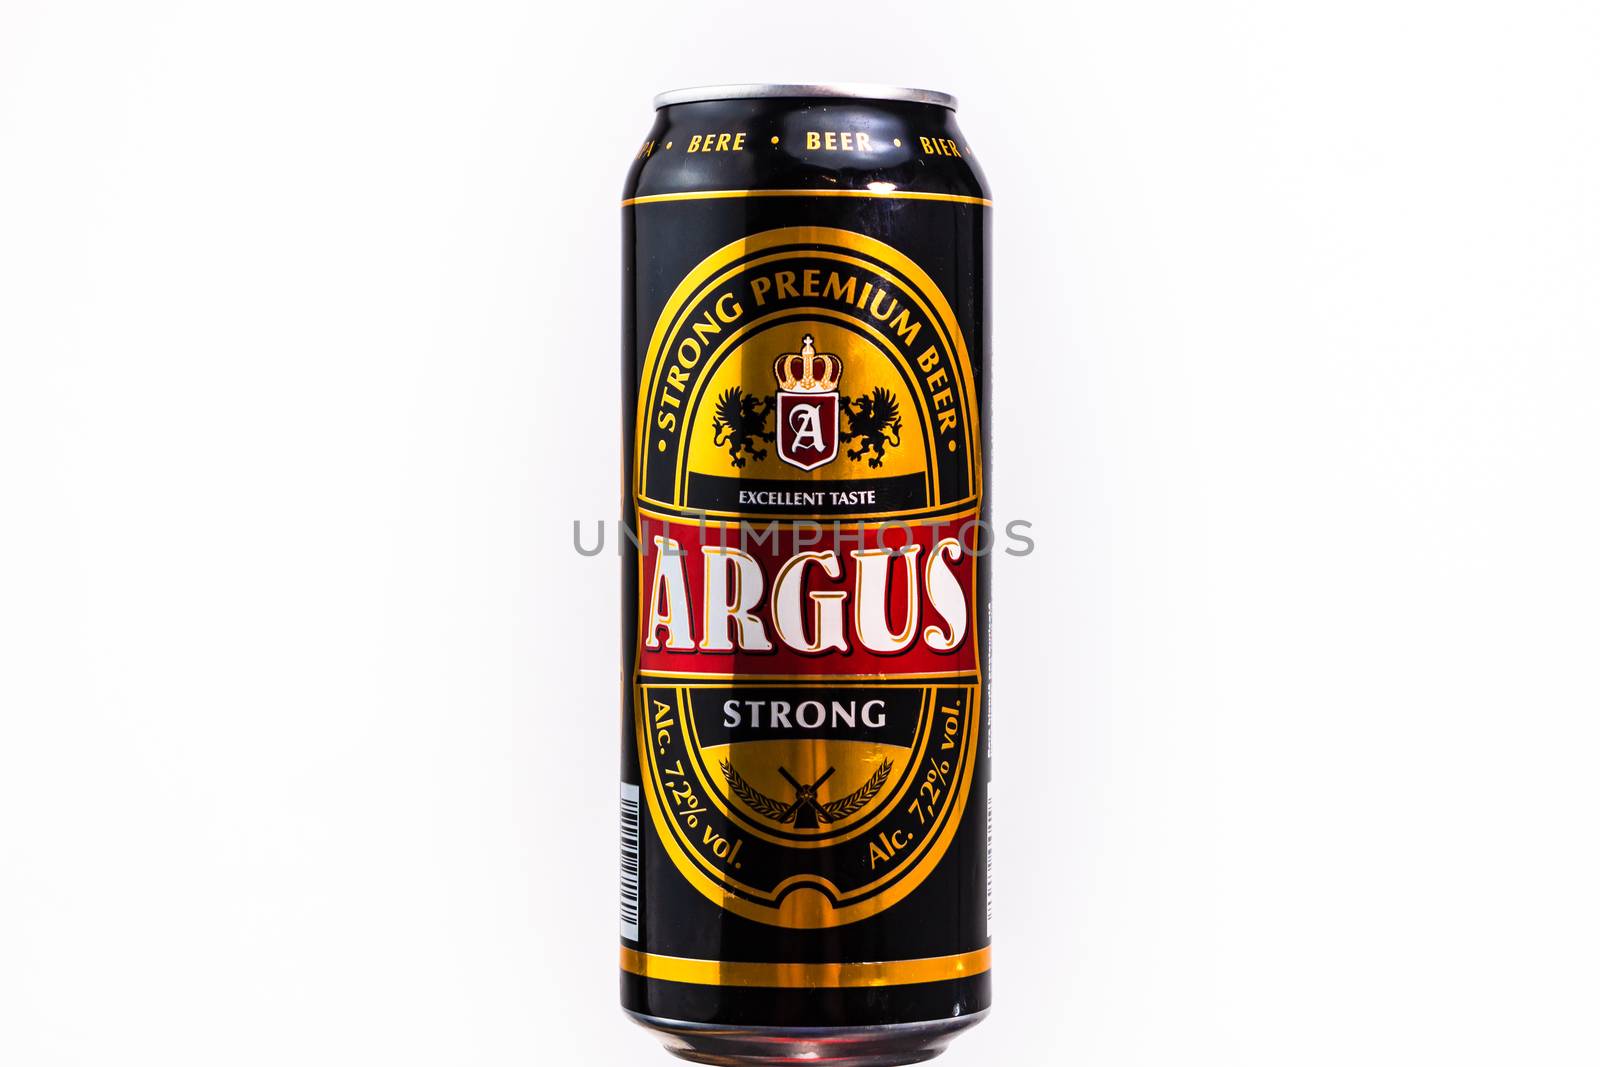 Argus Premium Lager beer. Lild supermarket own brand beer. Studi by vladispas